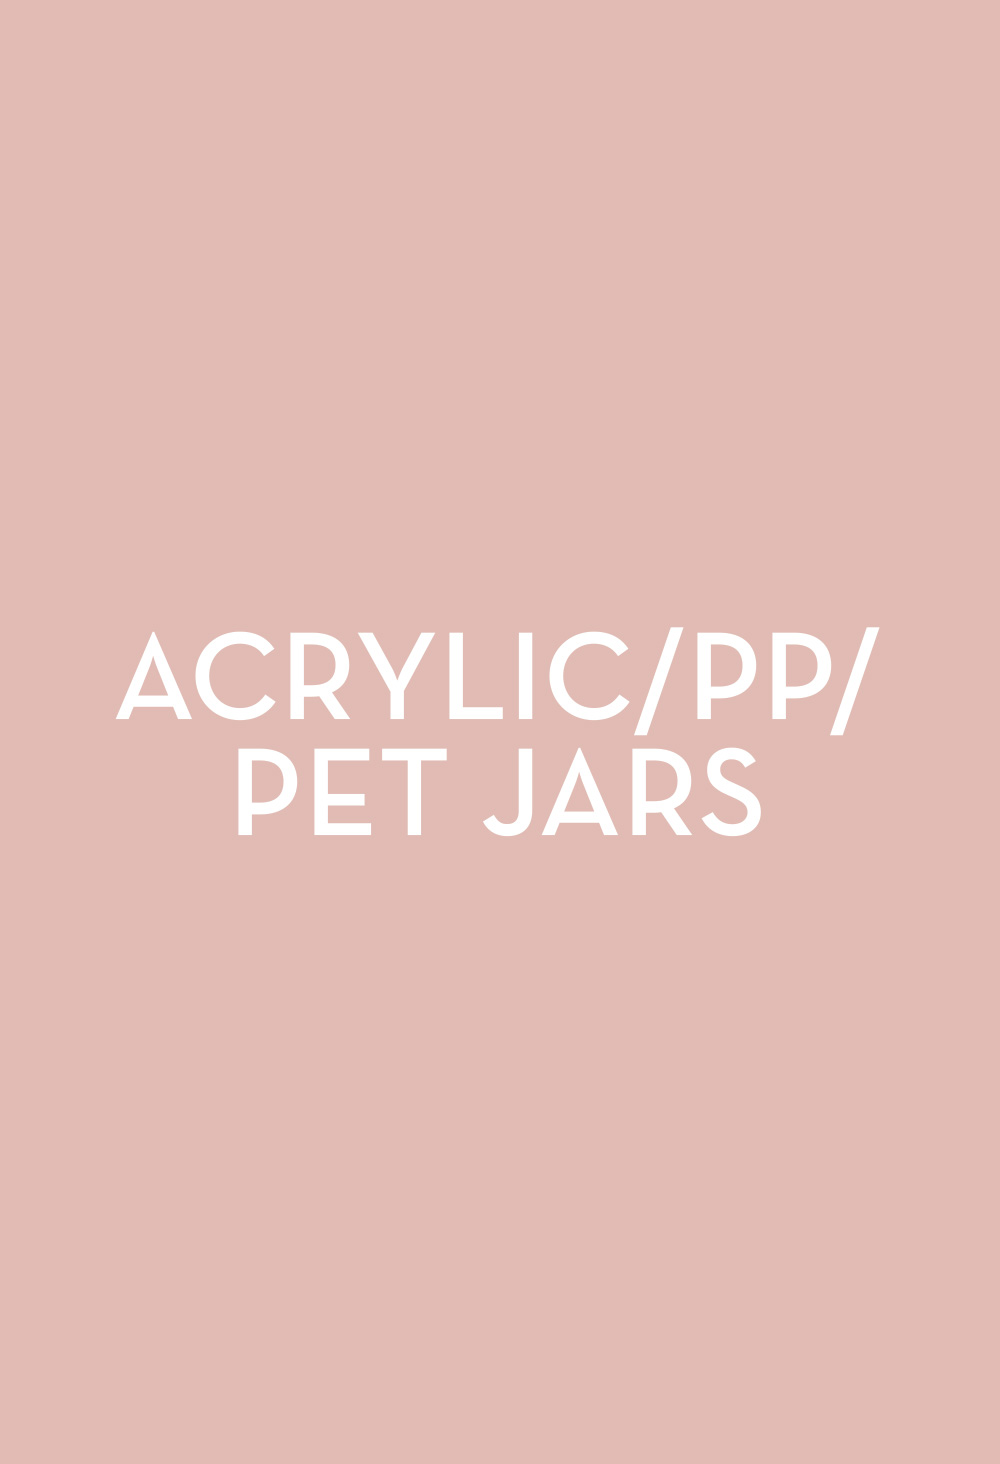 Acrylic/PP/PET Jars - Fasten